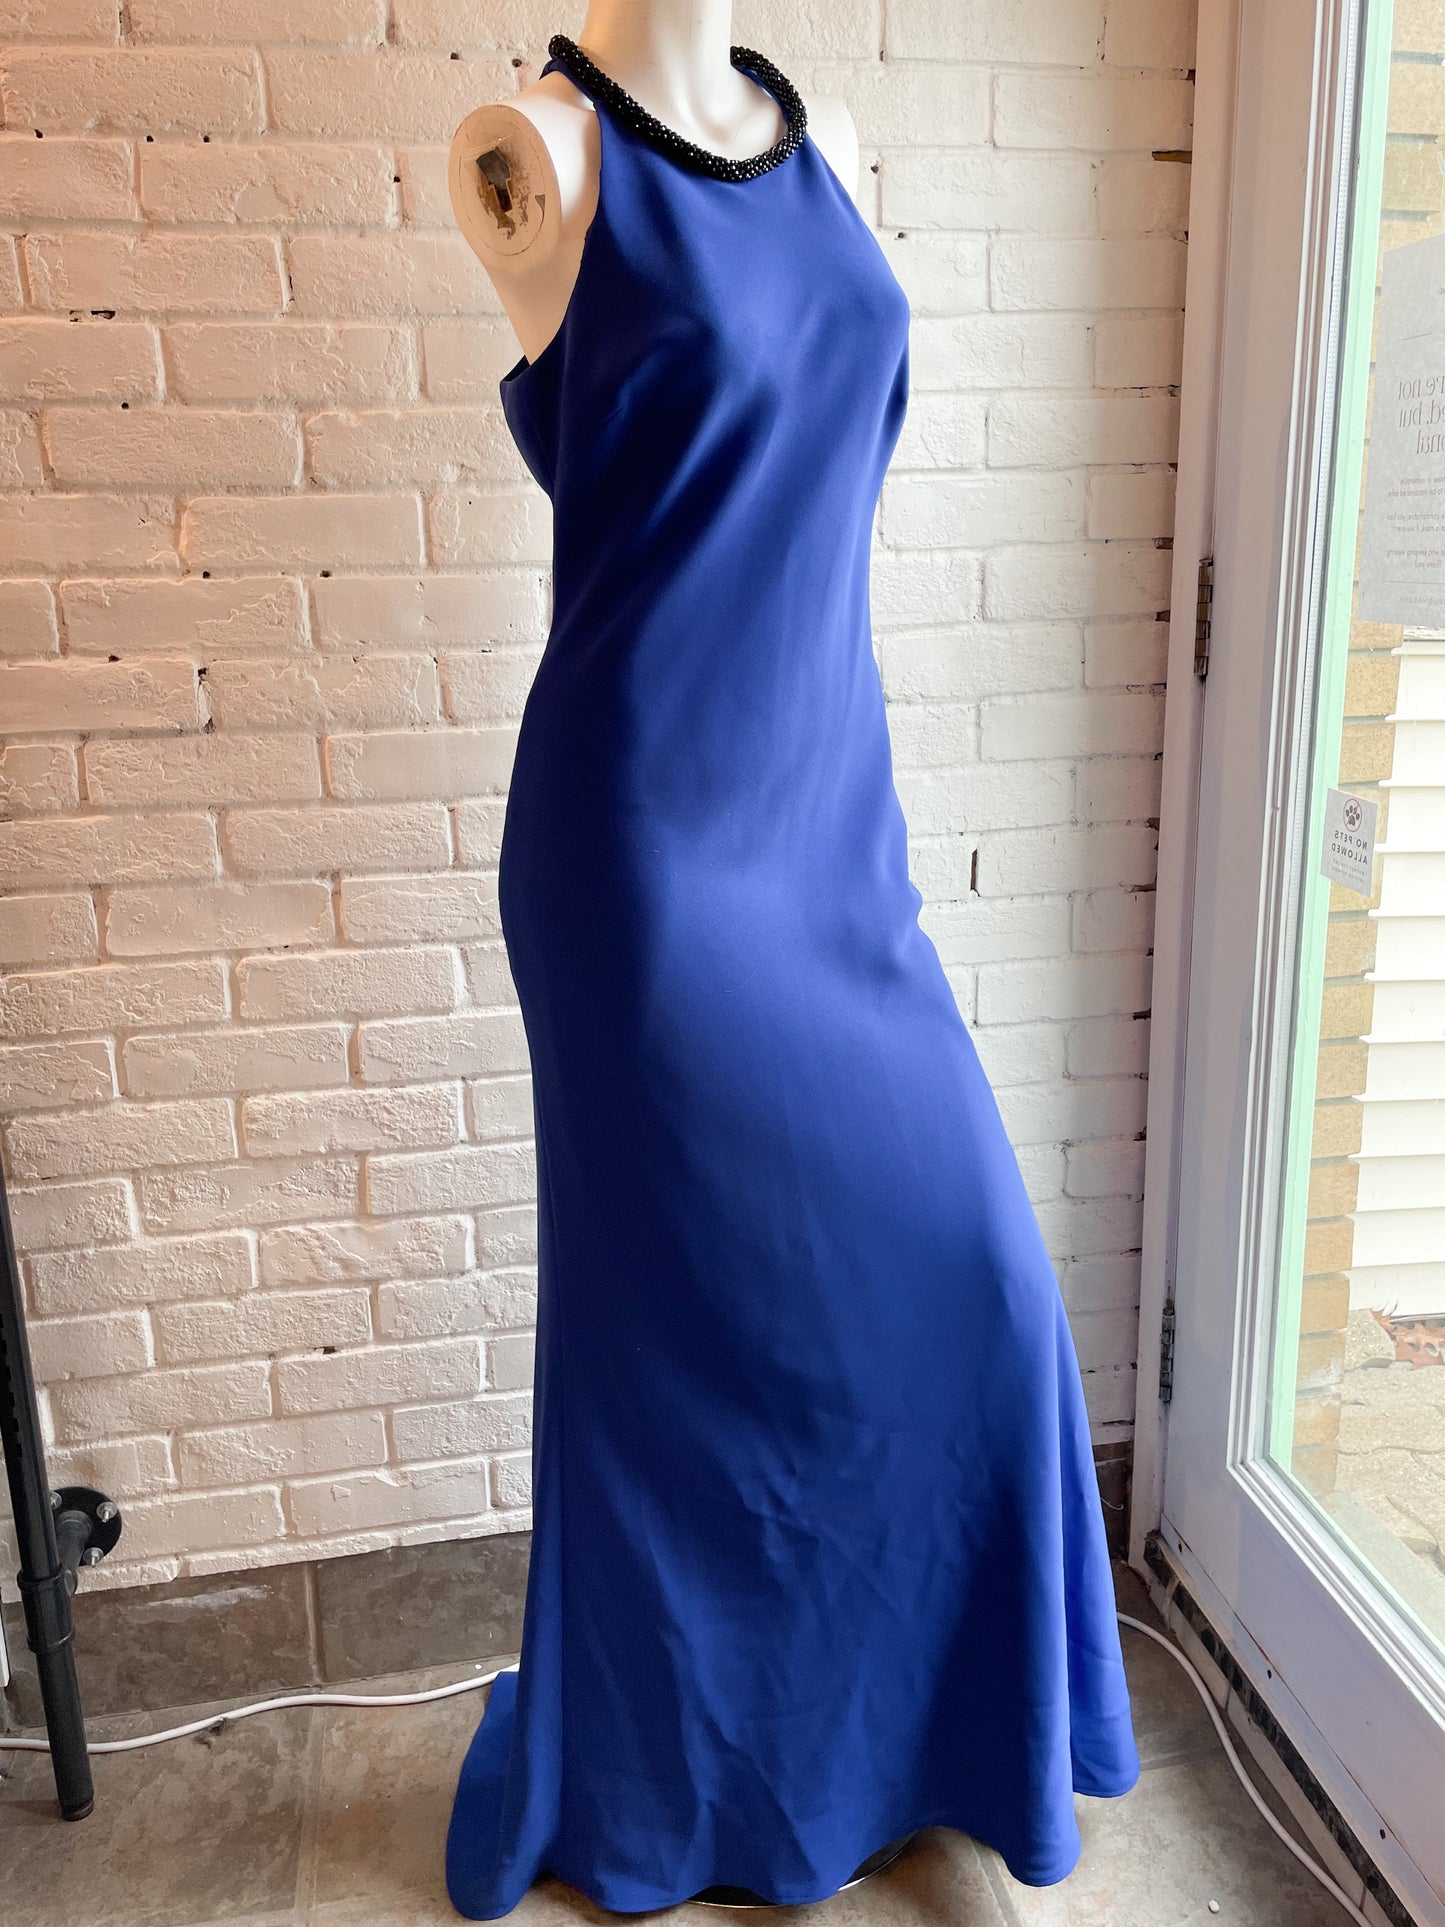 Calvin Klein Royal Blue Halter Beaded Neck Maxi Sheath Dress with Chapel Train - Size 4